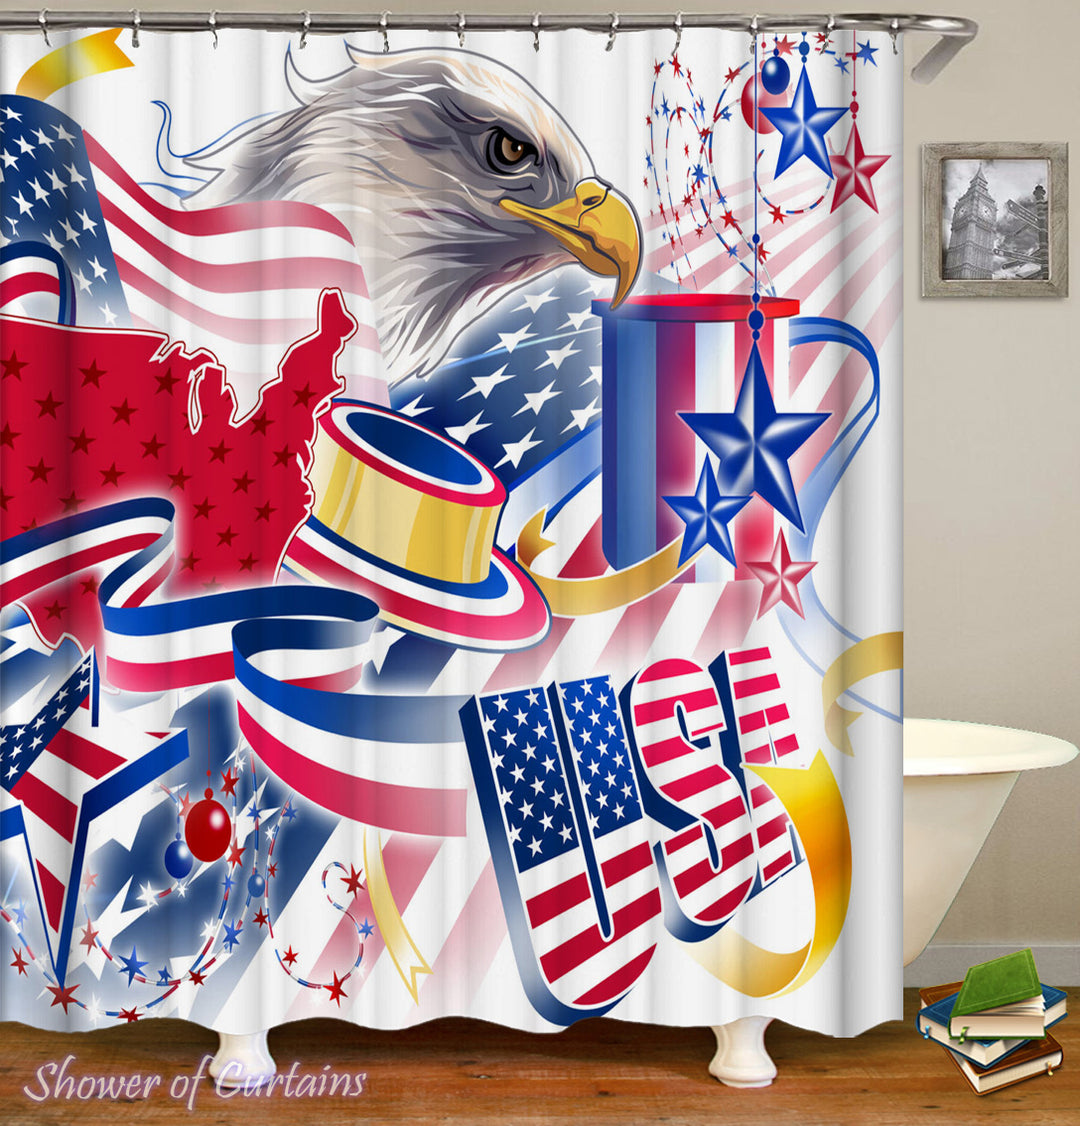 American Flag shower curtain - American Celebration